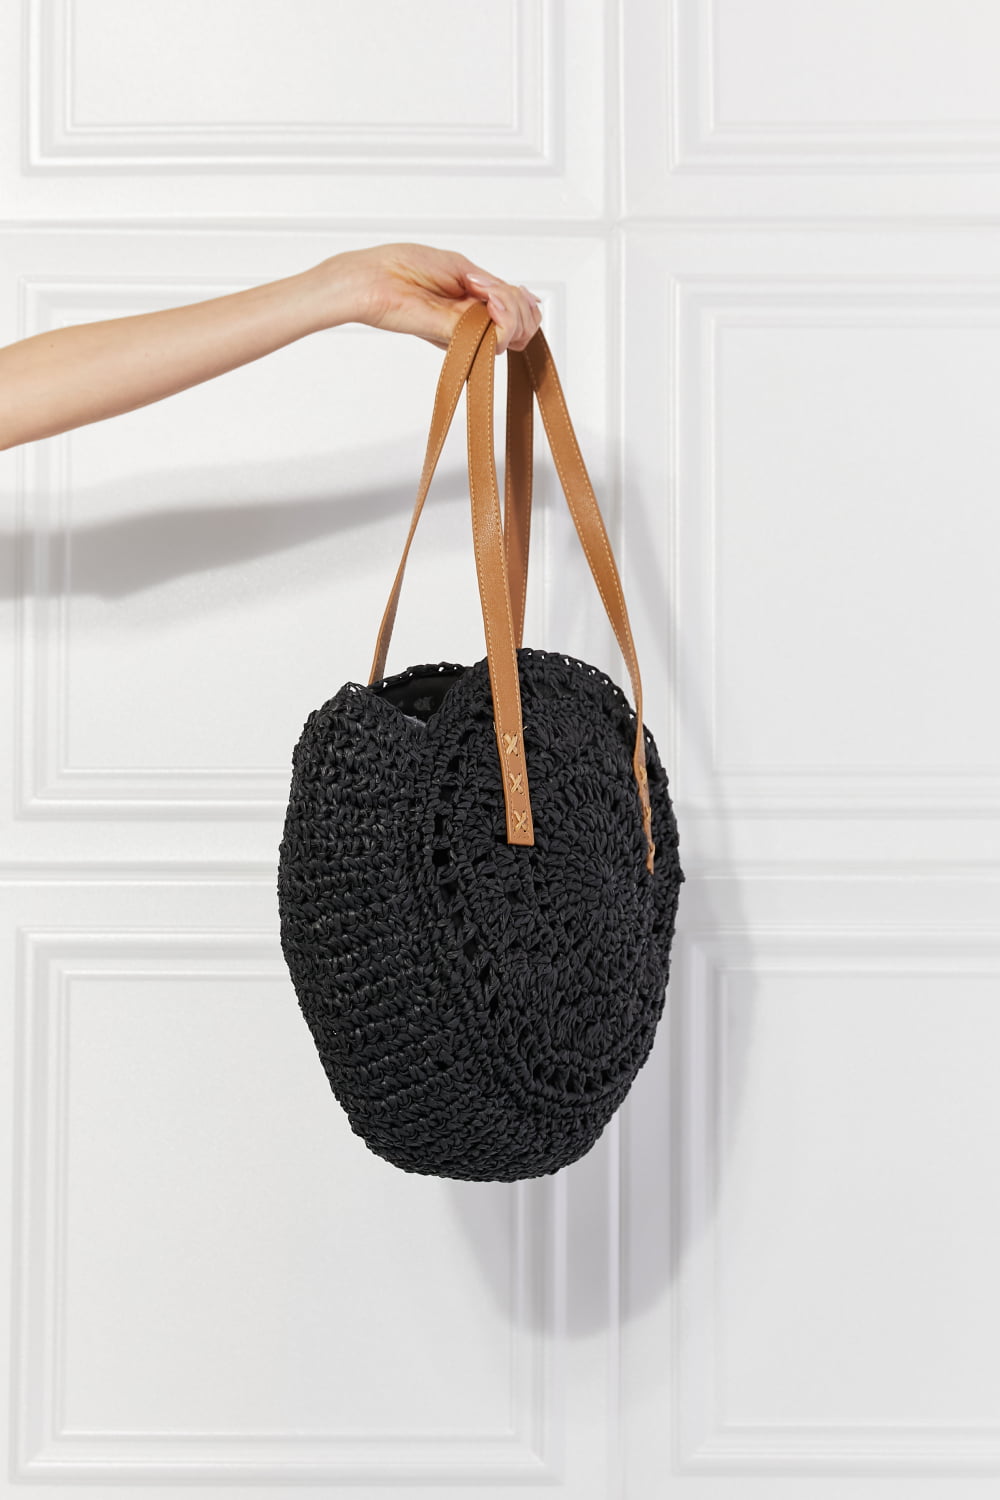 C'est La Vie Crochet Handbag - Tangerine Goddess